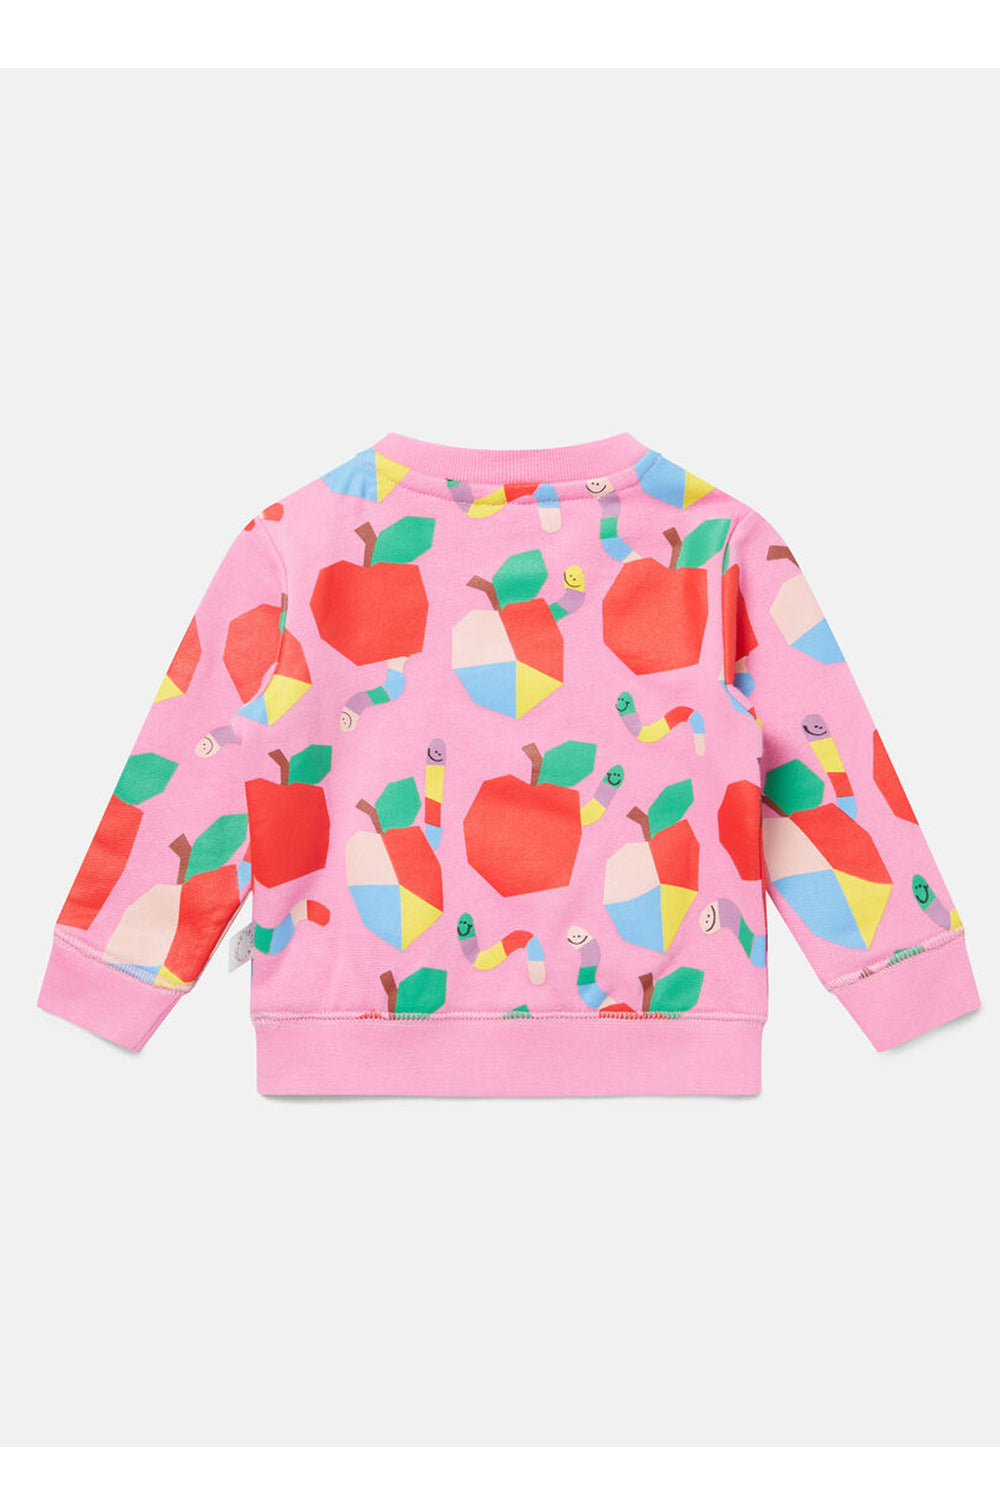 Baby Apples & Warms Sweatshirt for Girls